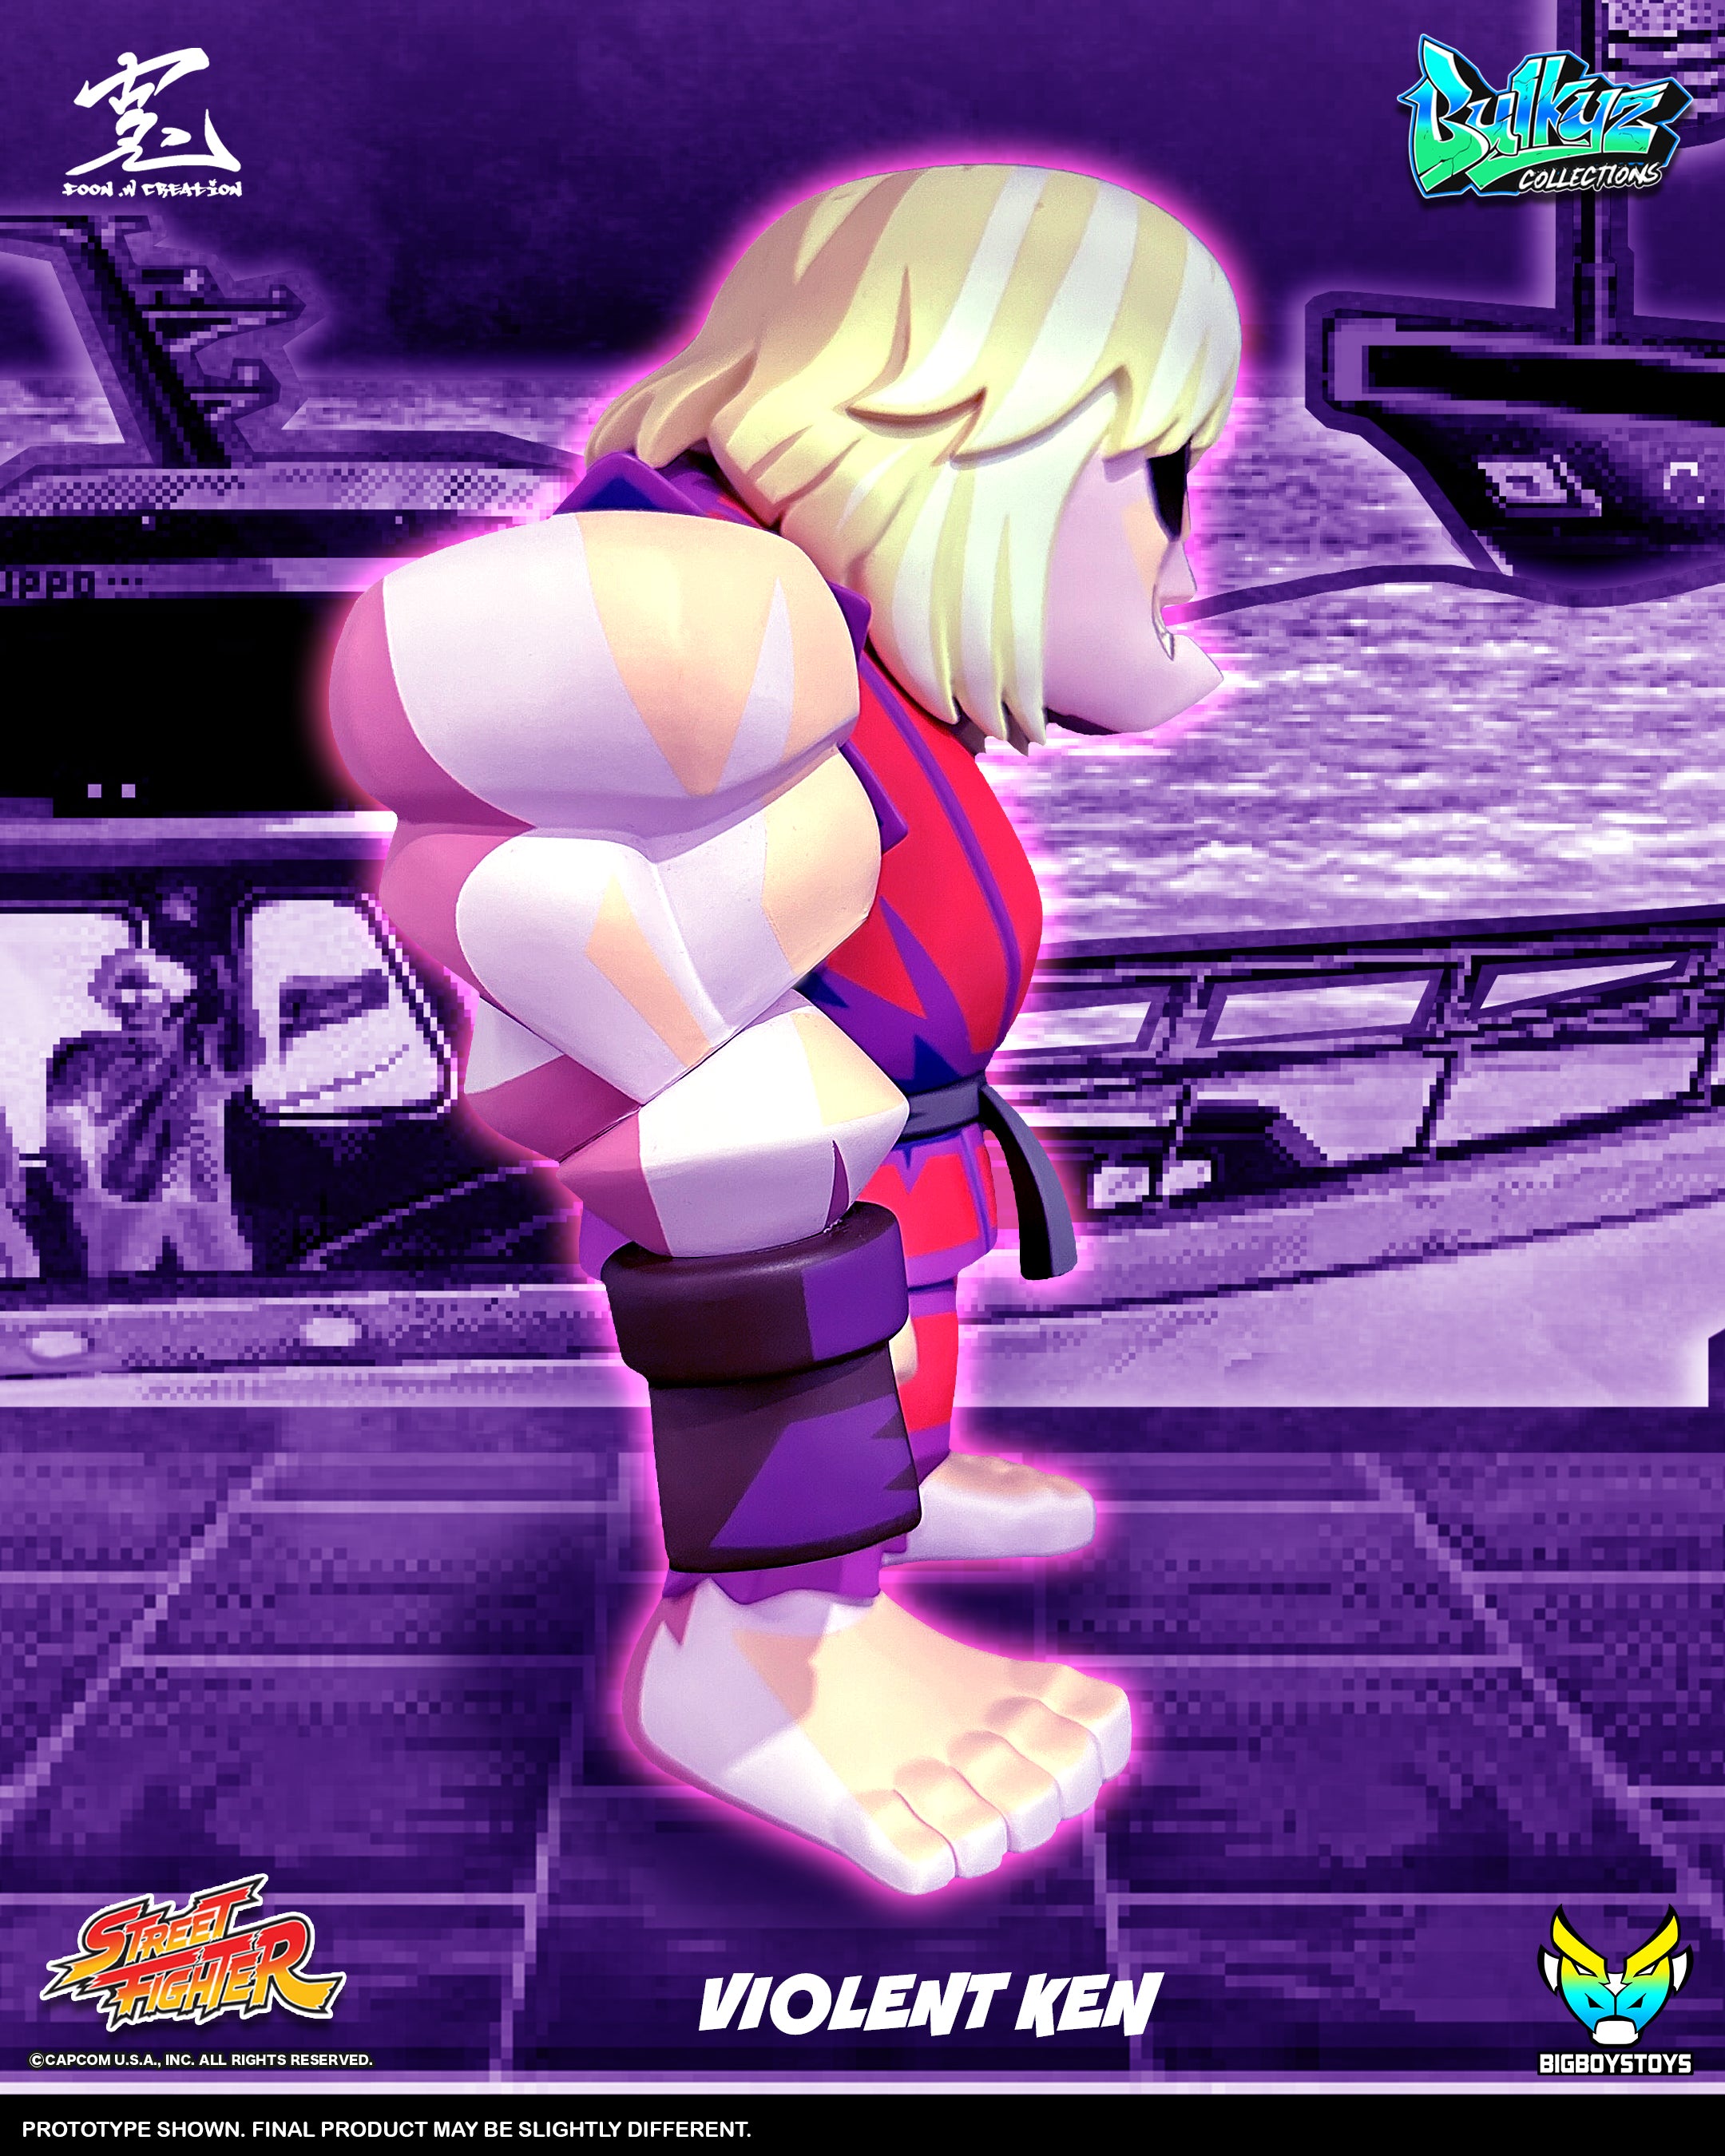 Street Fighter Bulkyz Collections – Violent Ken - Preorder